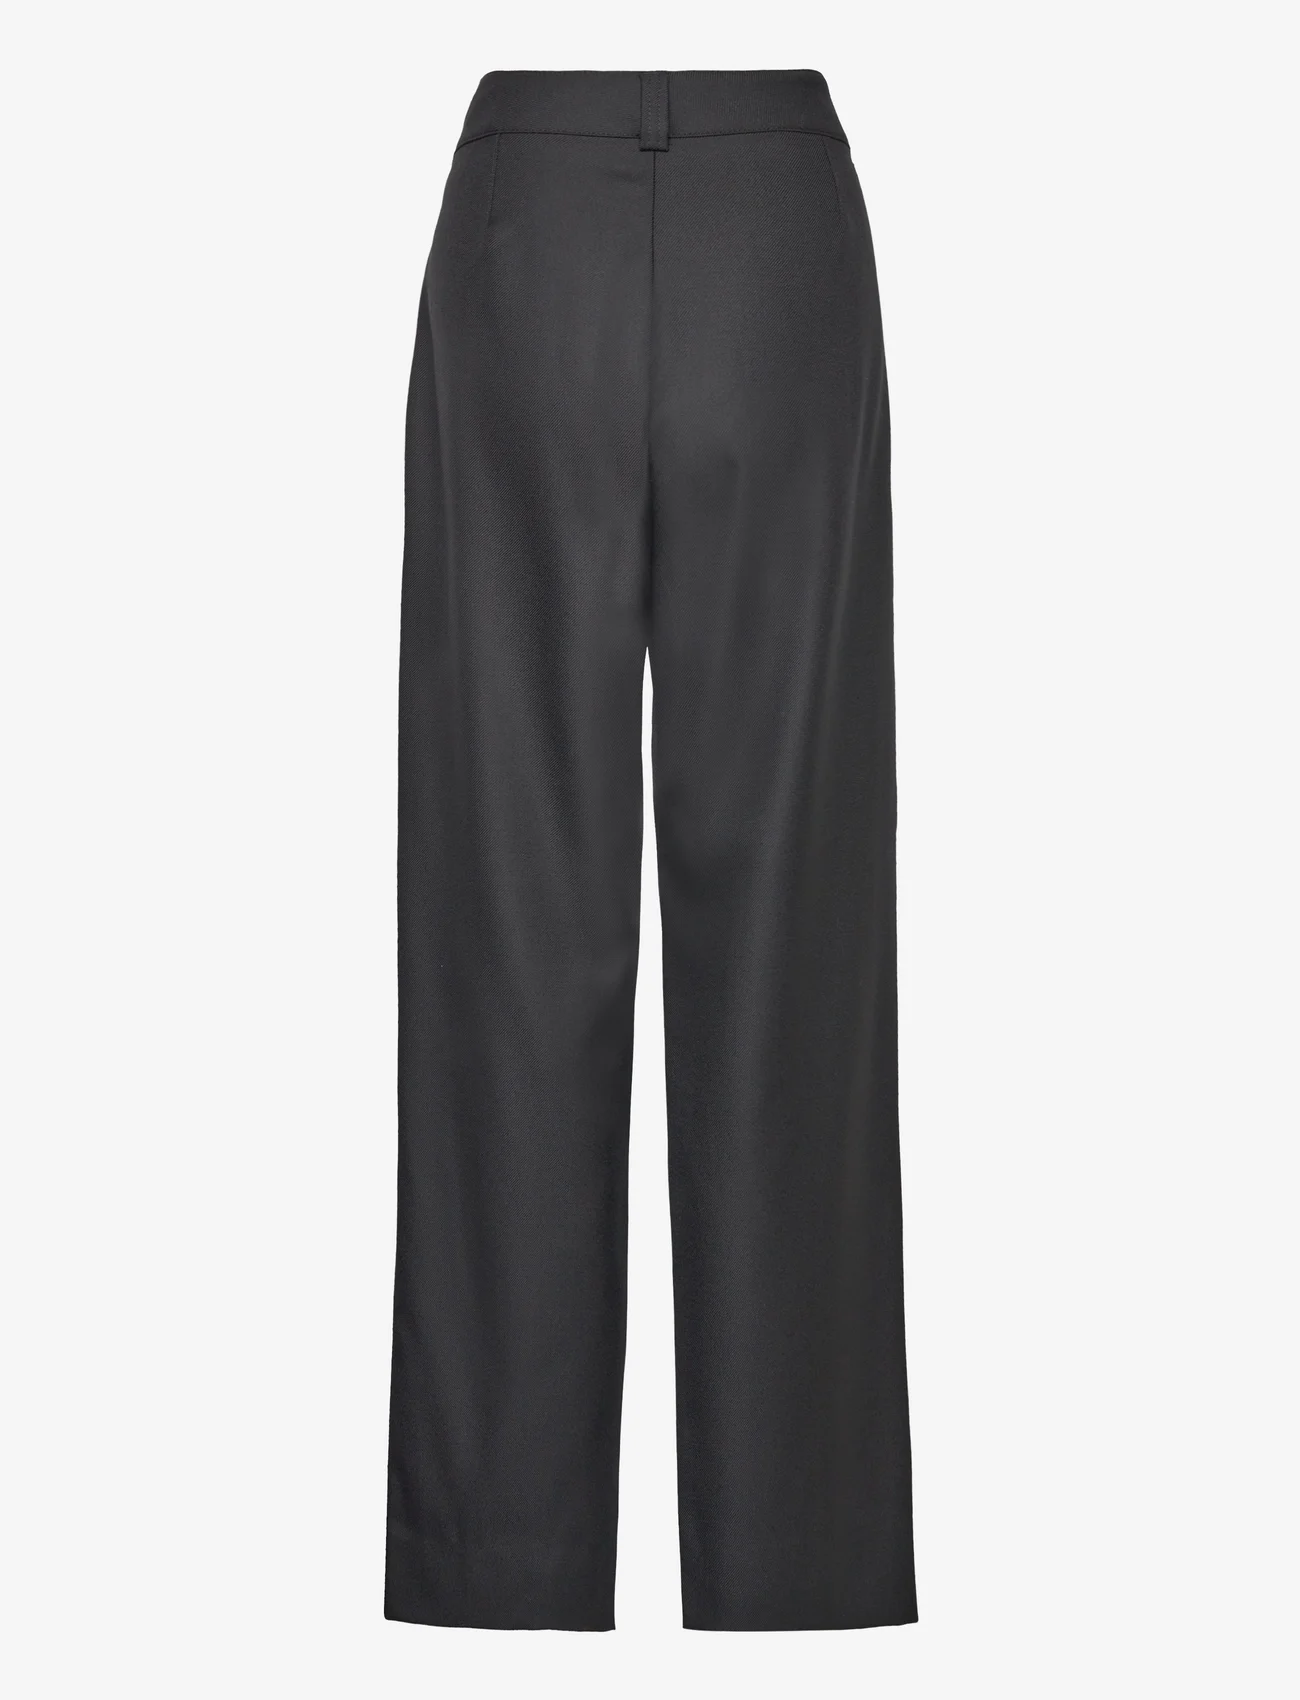 BOSS - Teleah - tailored trousers - black - 1